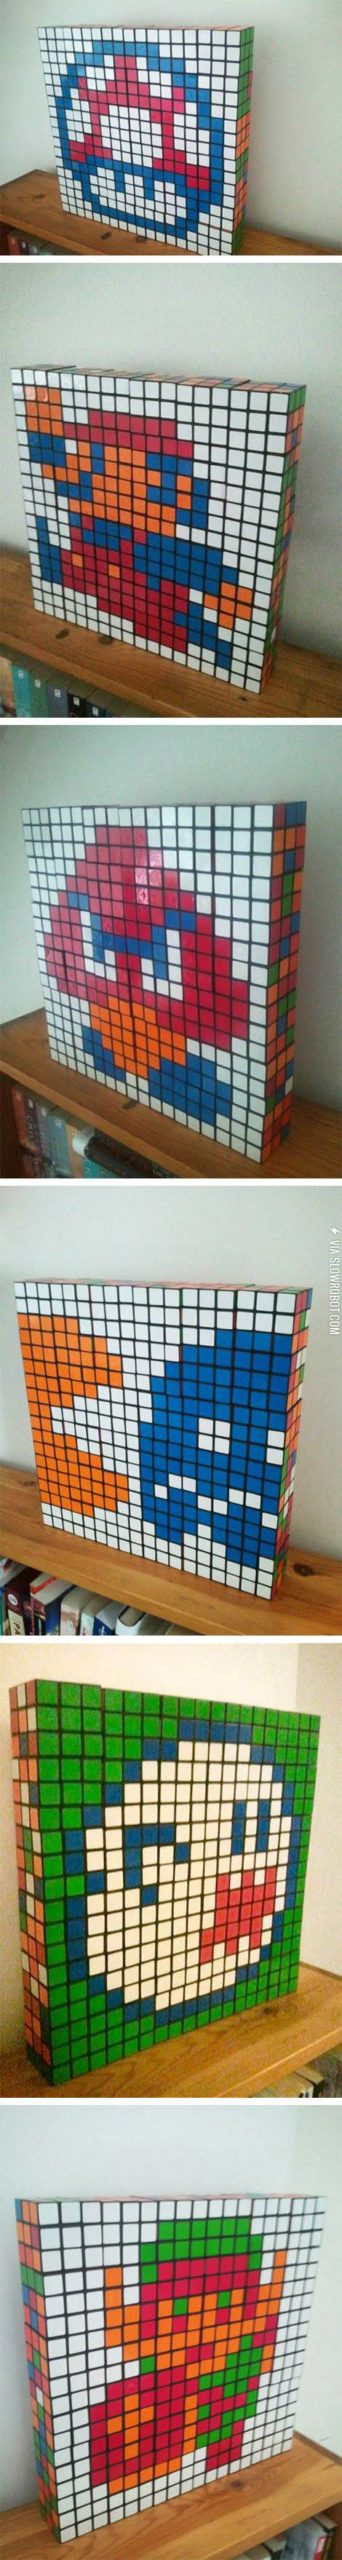 Rubik%26%238217%3Bs+cubism.